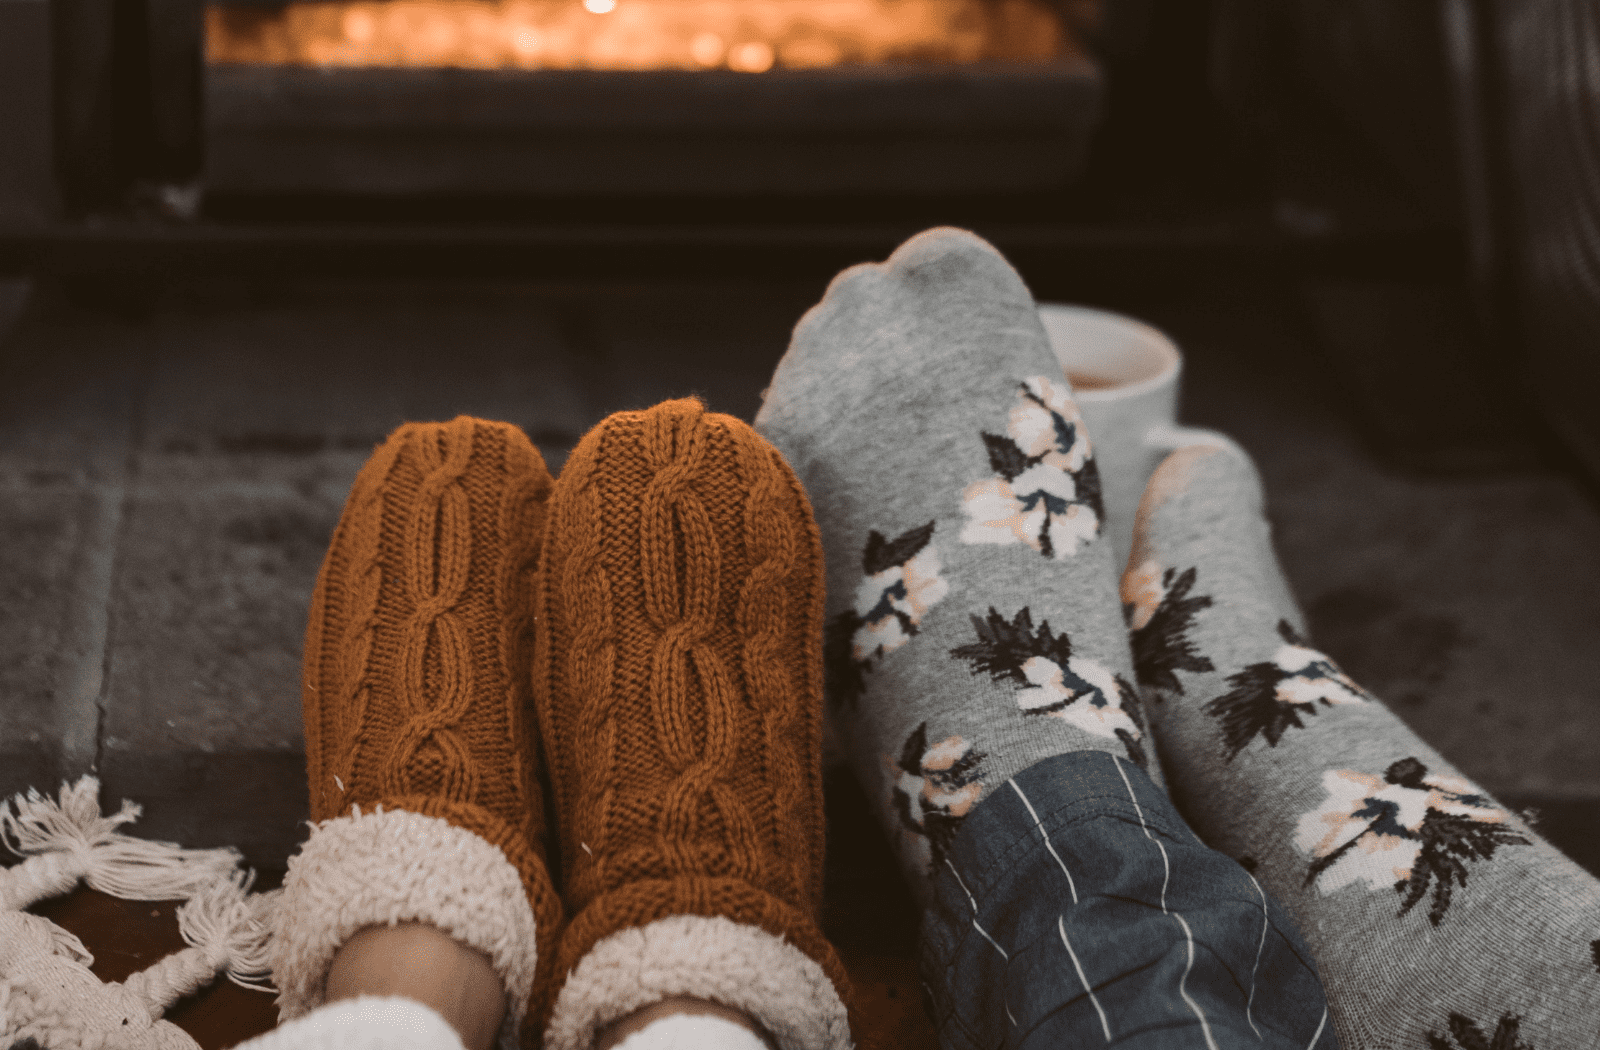 Washi × Merino Wool Middle Socks – Snow Peak